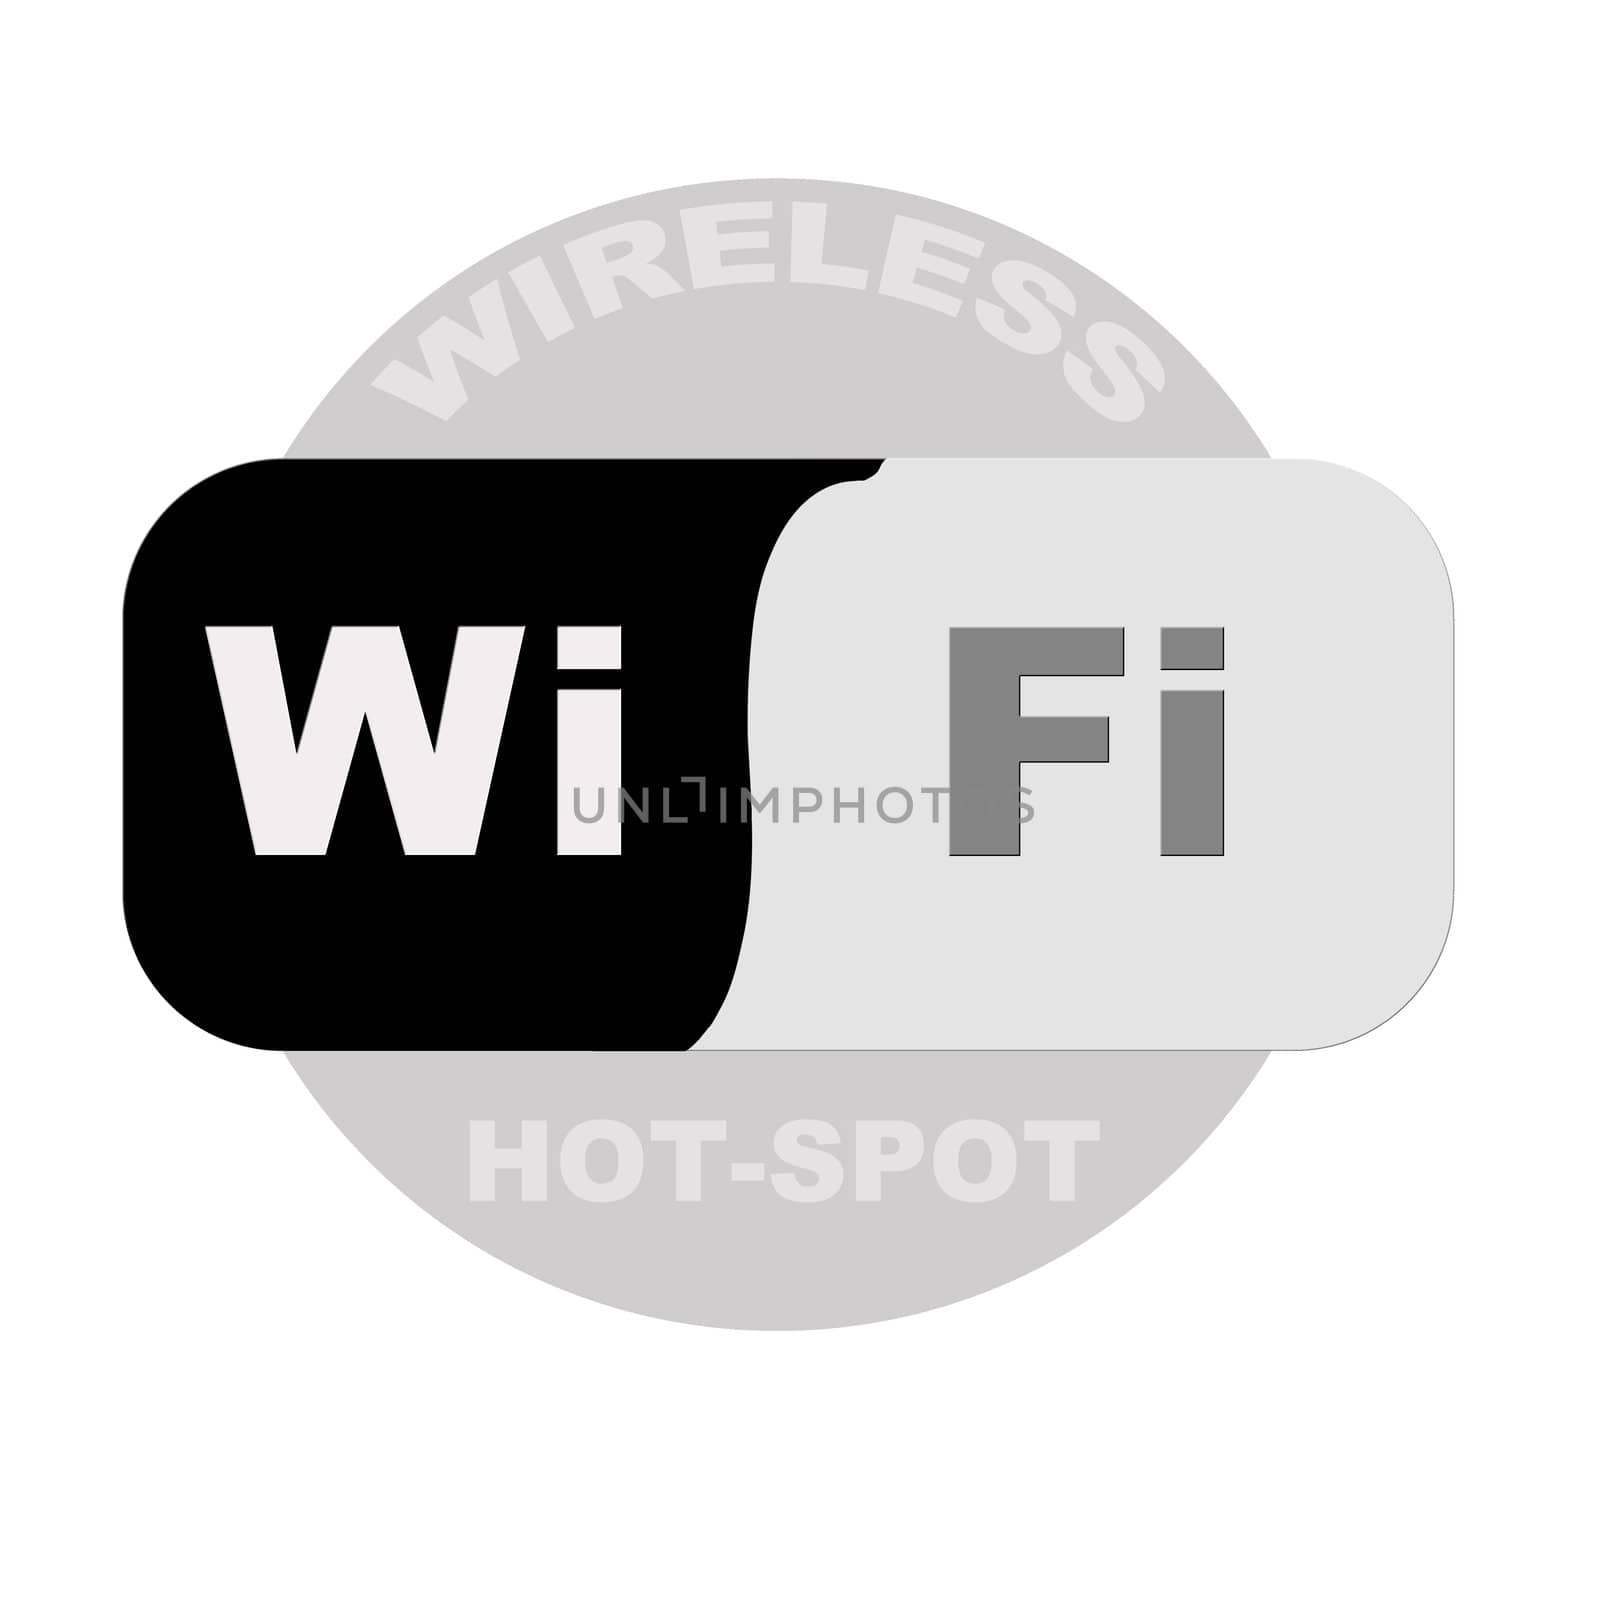 Wireless Hot-Spot Sign by berkan